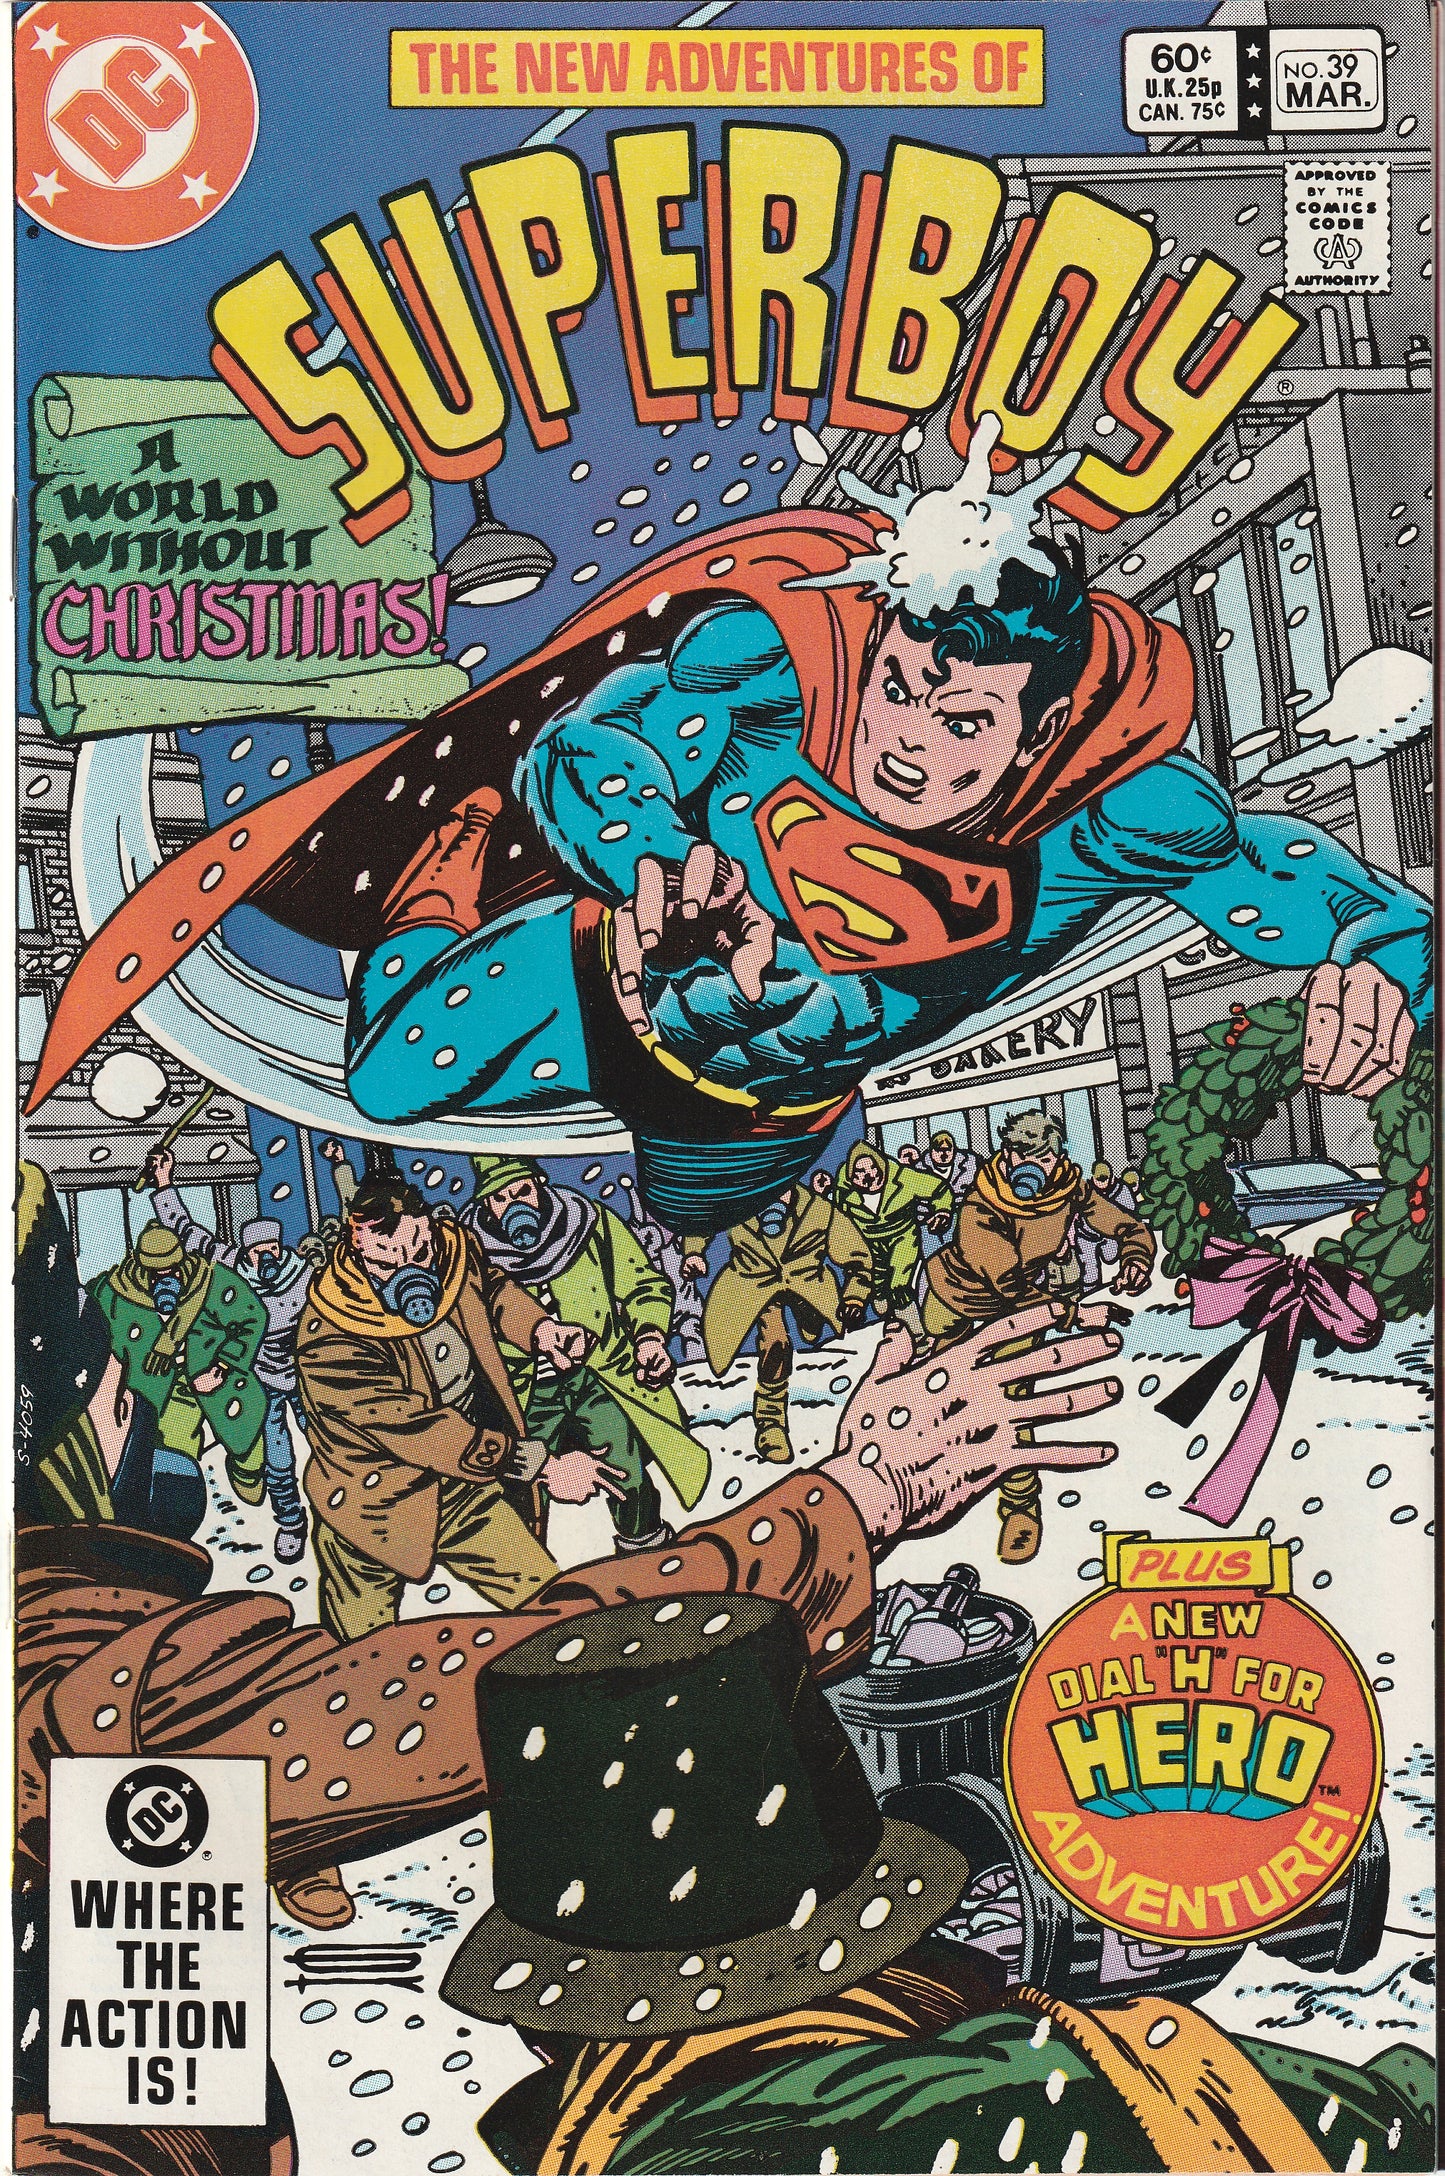 New Adventures of Superboy #39 (1983)